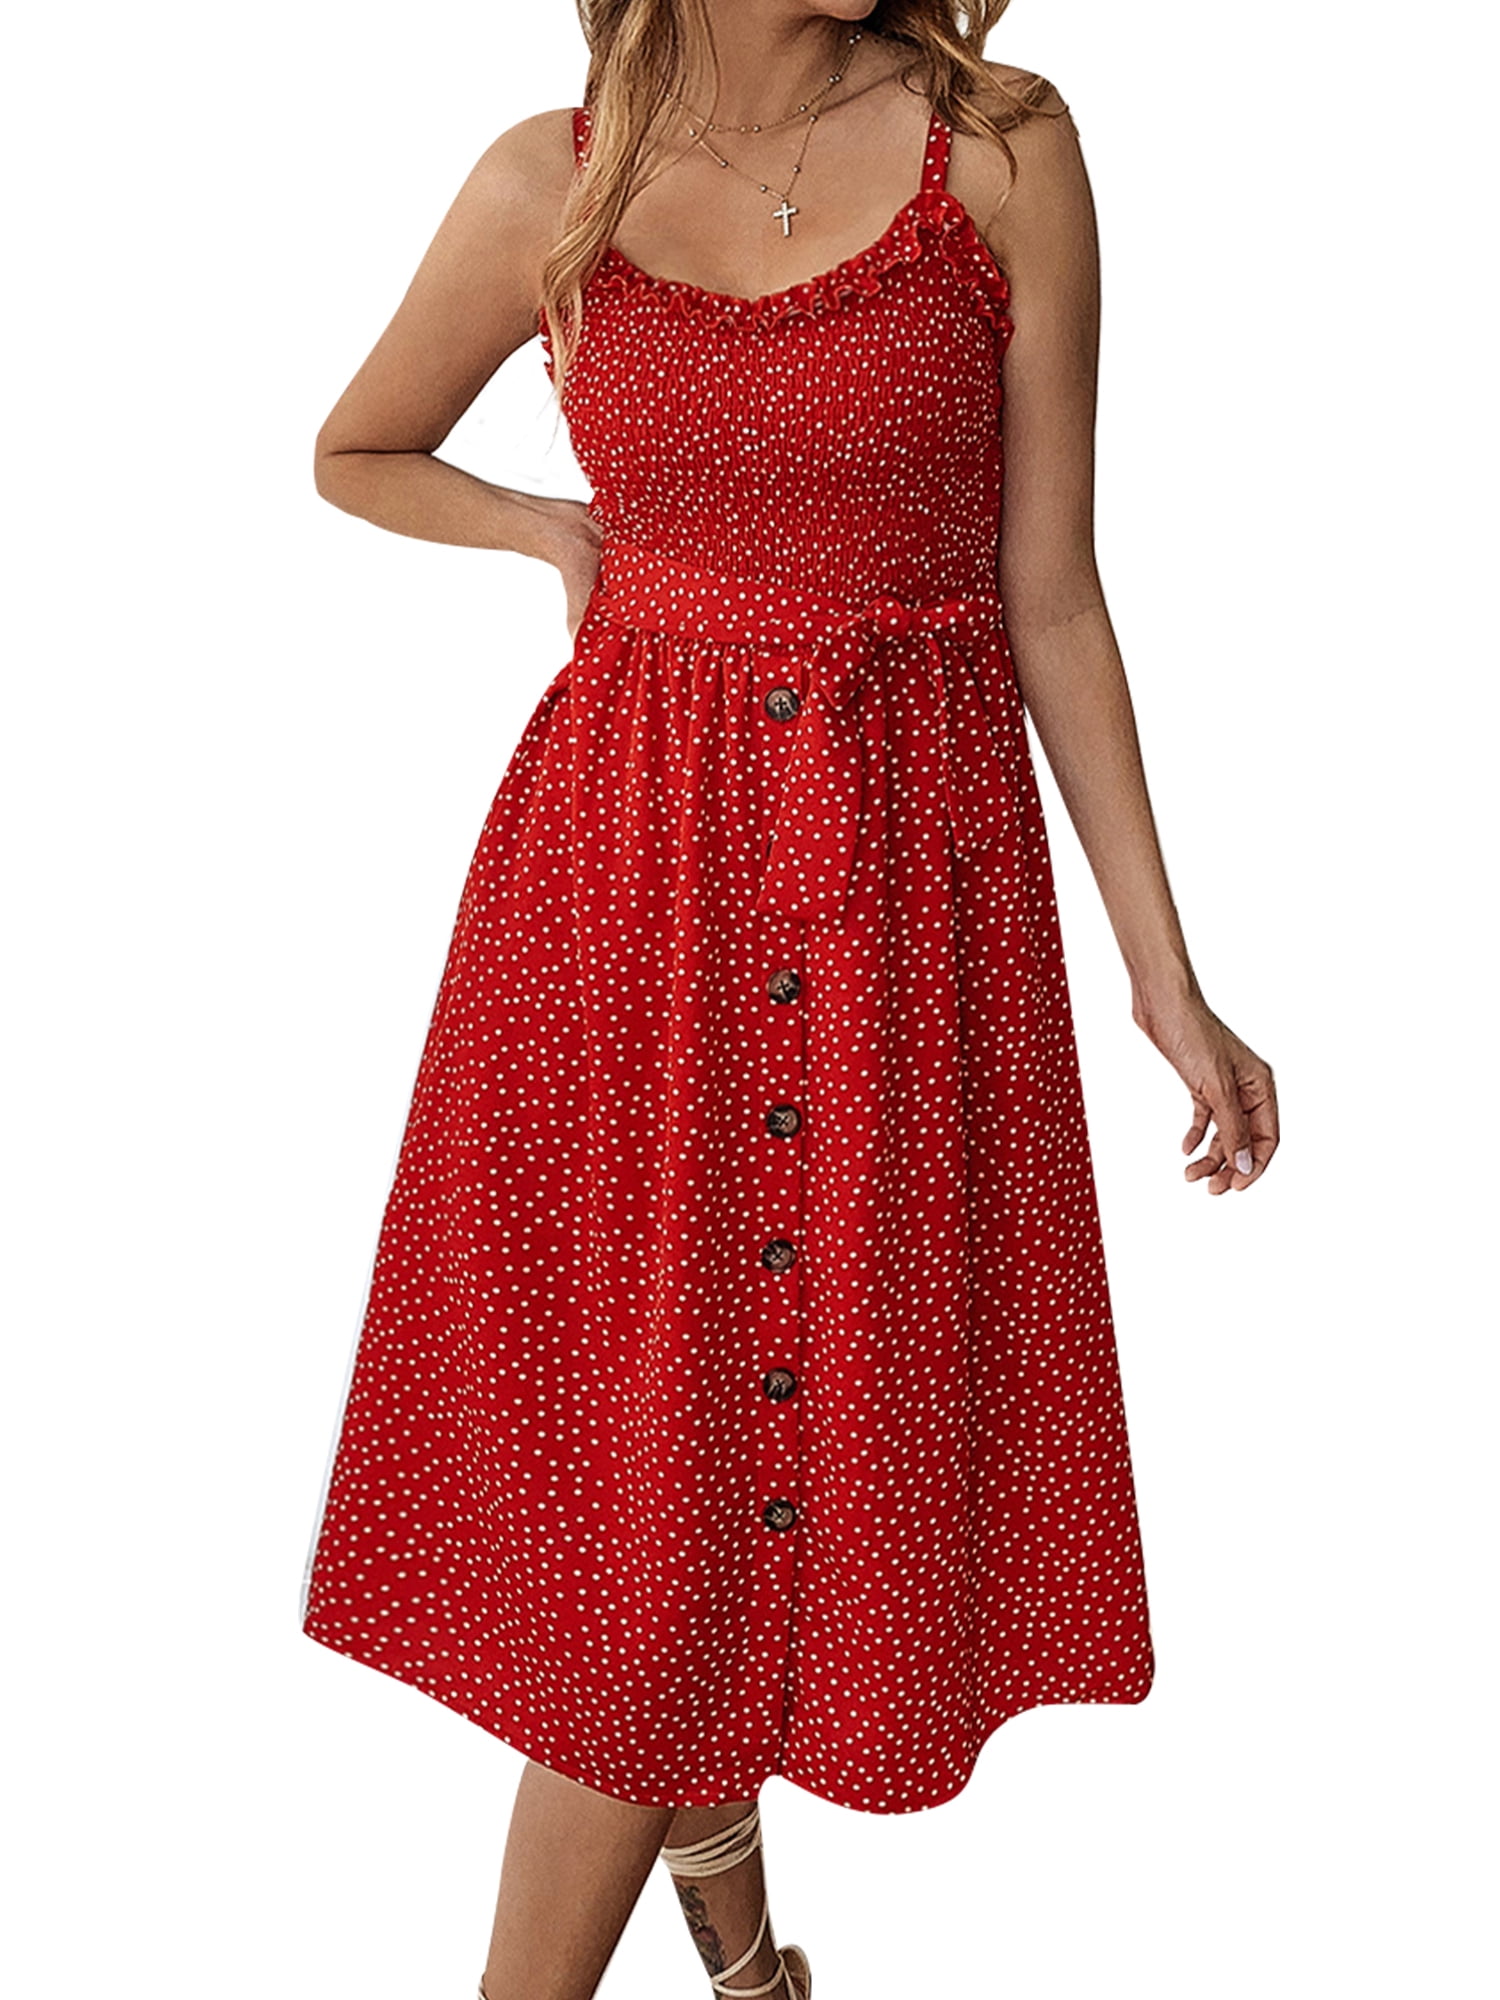 Ladies 26" Red & Black Polka Dot Rockerbilly Skirt & Necktie Fancy Dress 